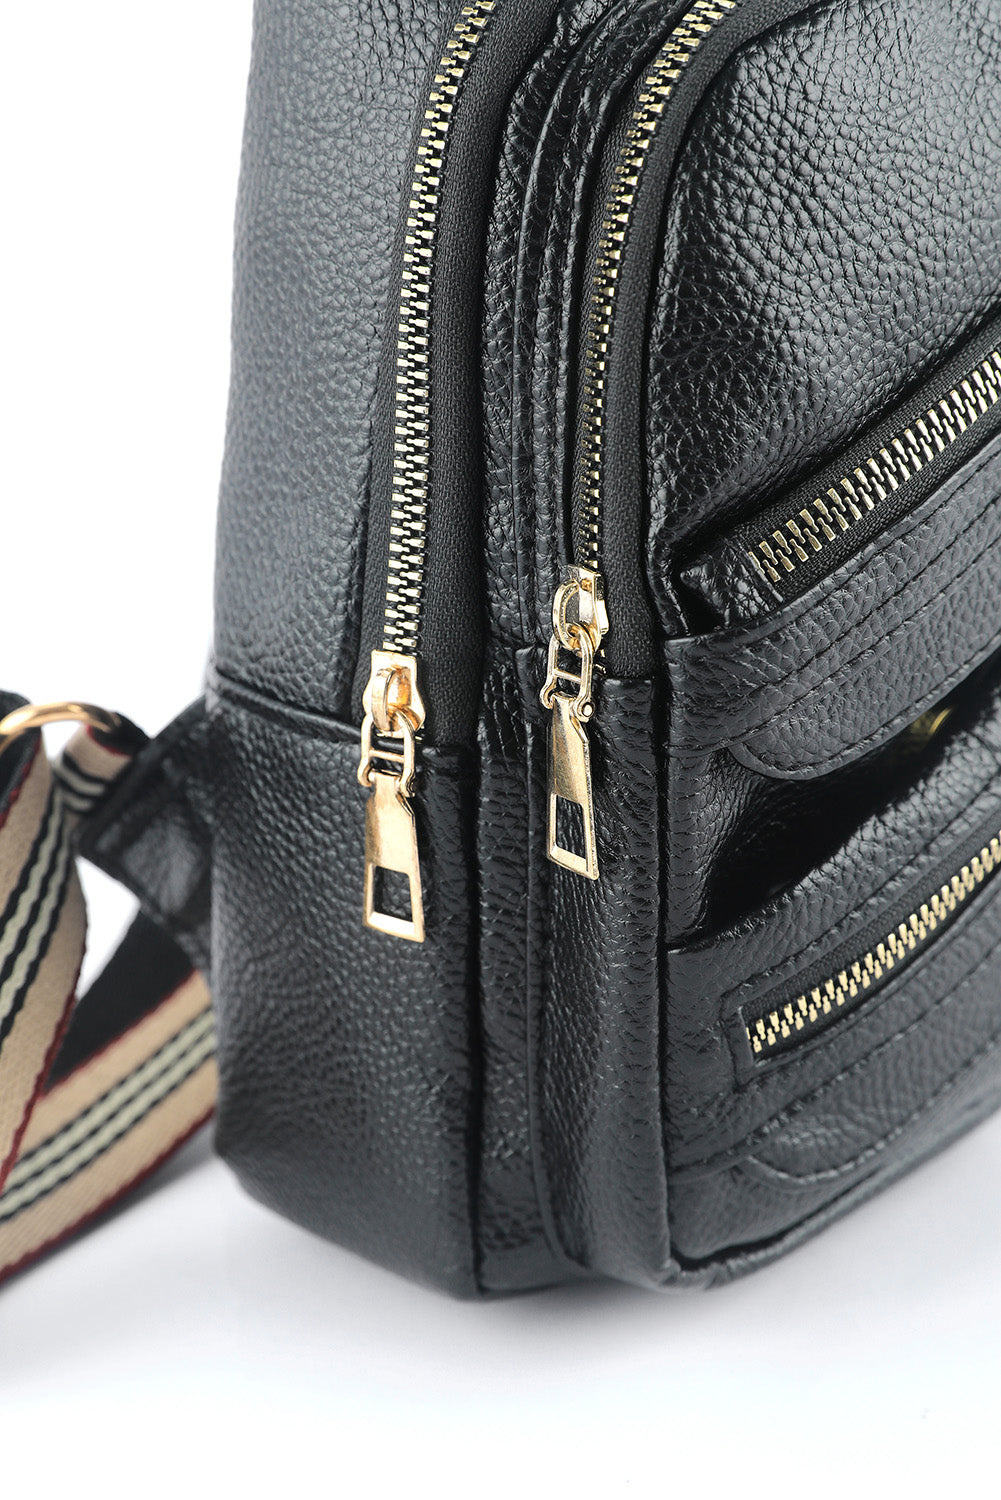 belinda black faux sling bag - black/brown